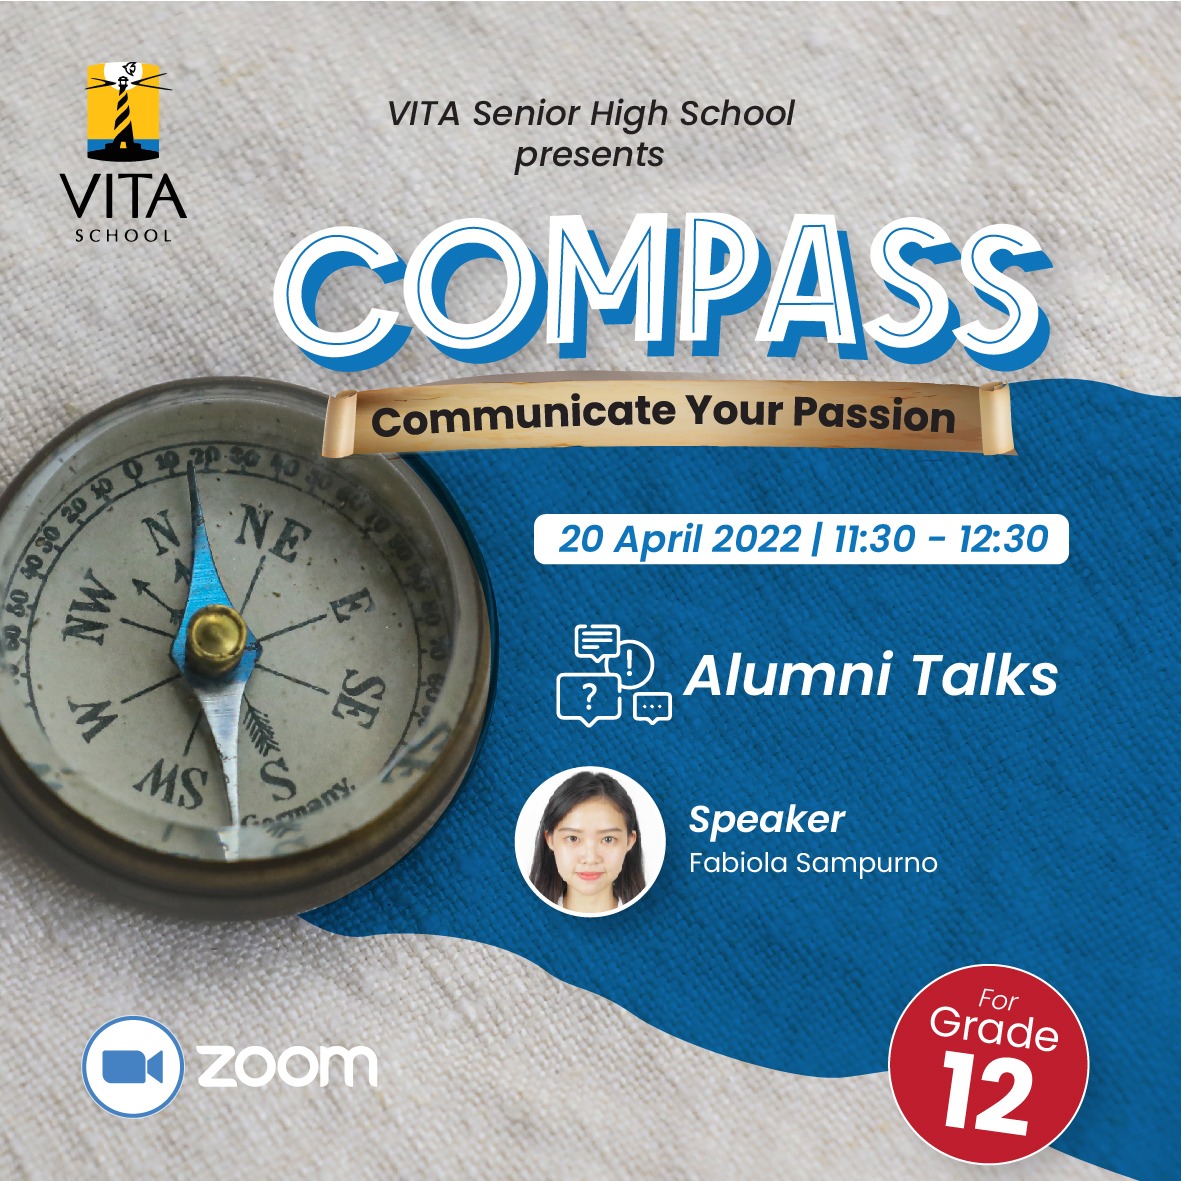 VITA Senior High COMPASS 2022 - Alumni Talks with Fabiola Sampurno